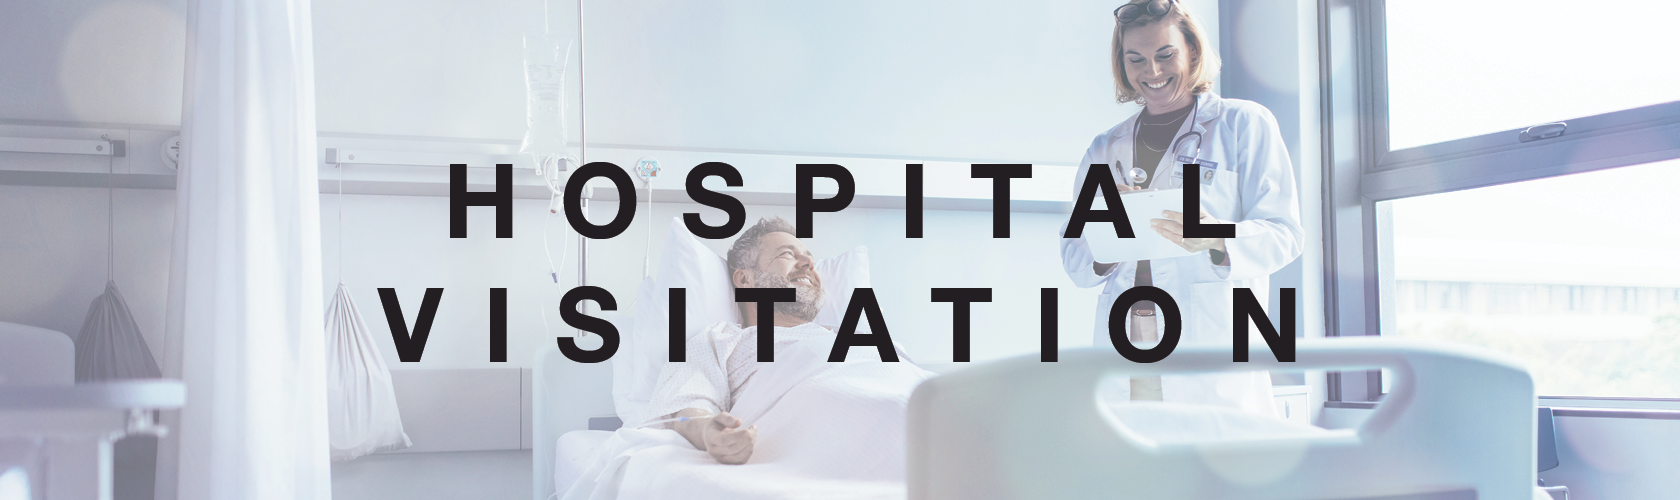 HospitalVisitation